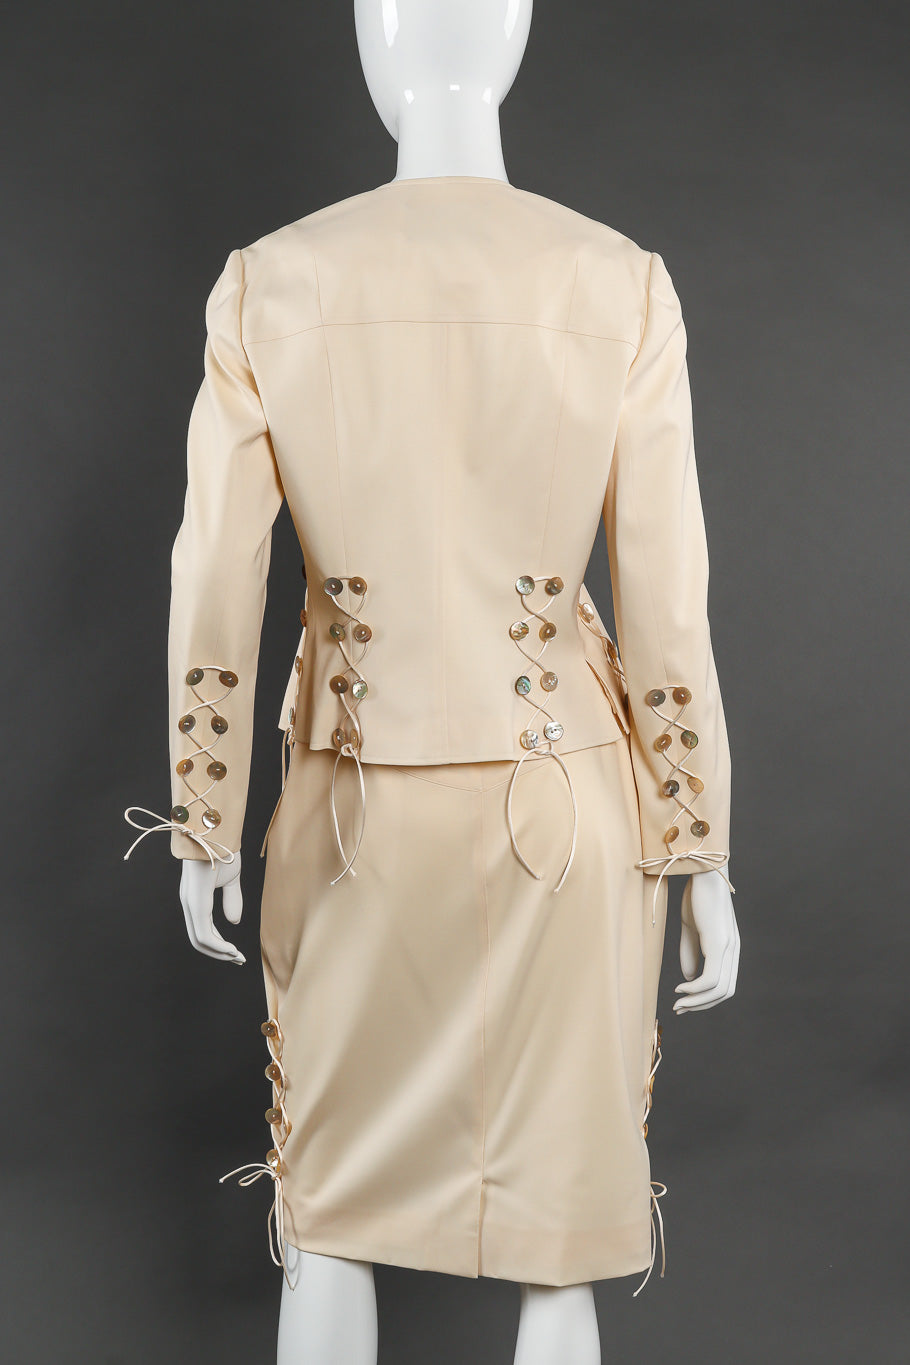 Skirt suit by John Galliano on mannequin back @recessla